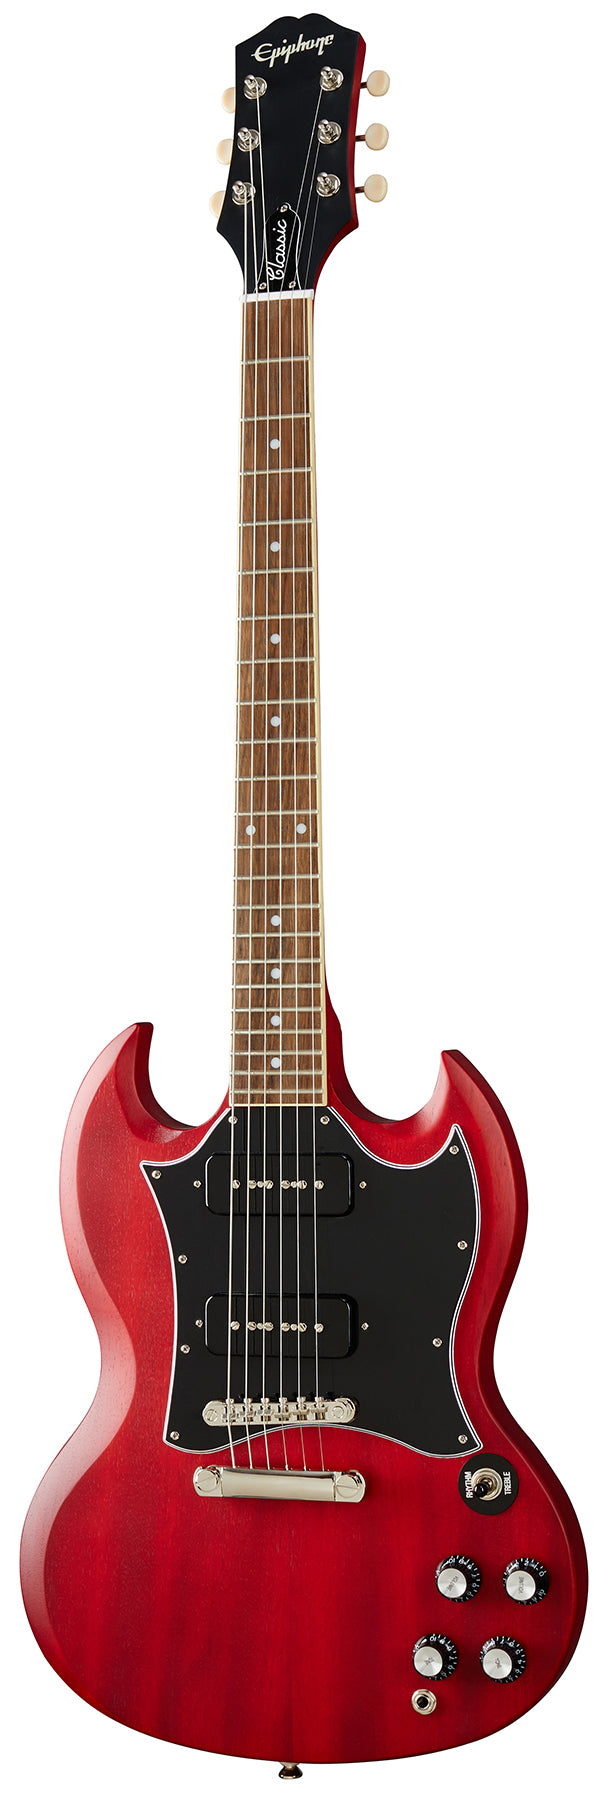 Epiphone SG CLASSIC Series Electric Guitar (Worn Cherry)